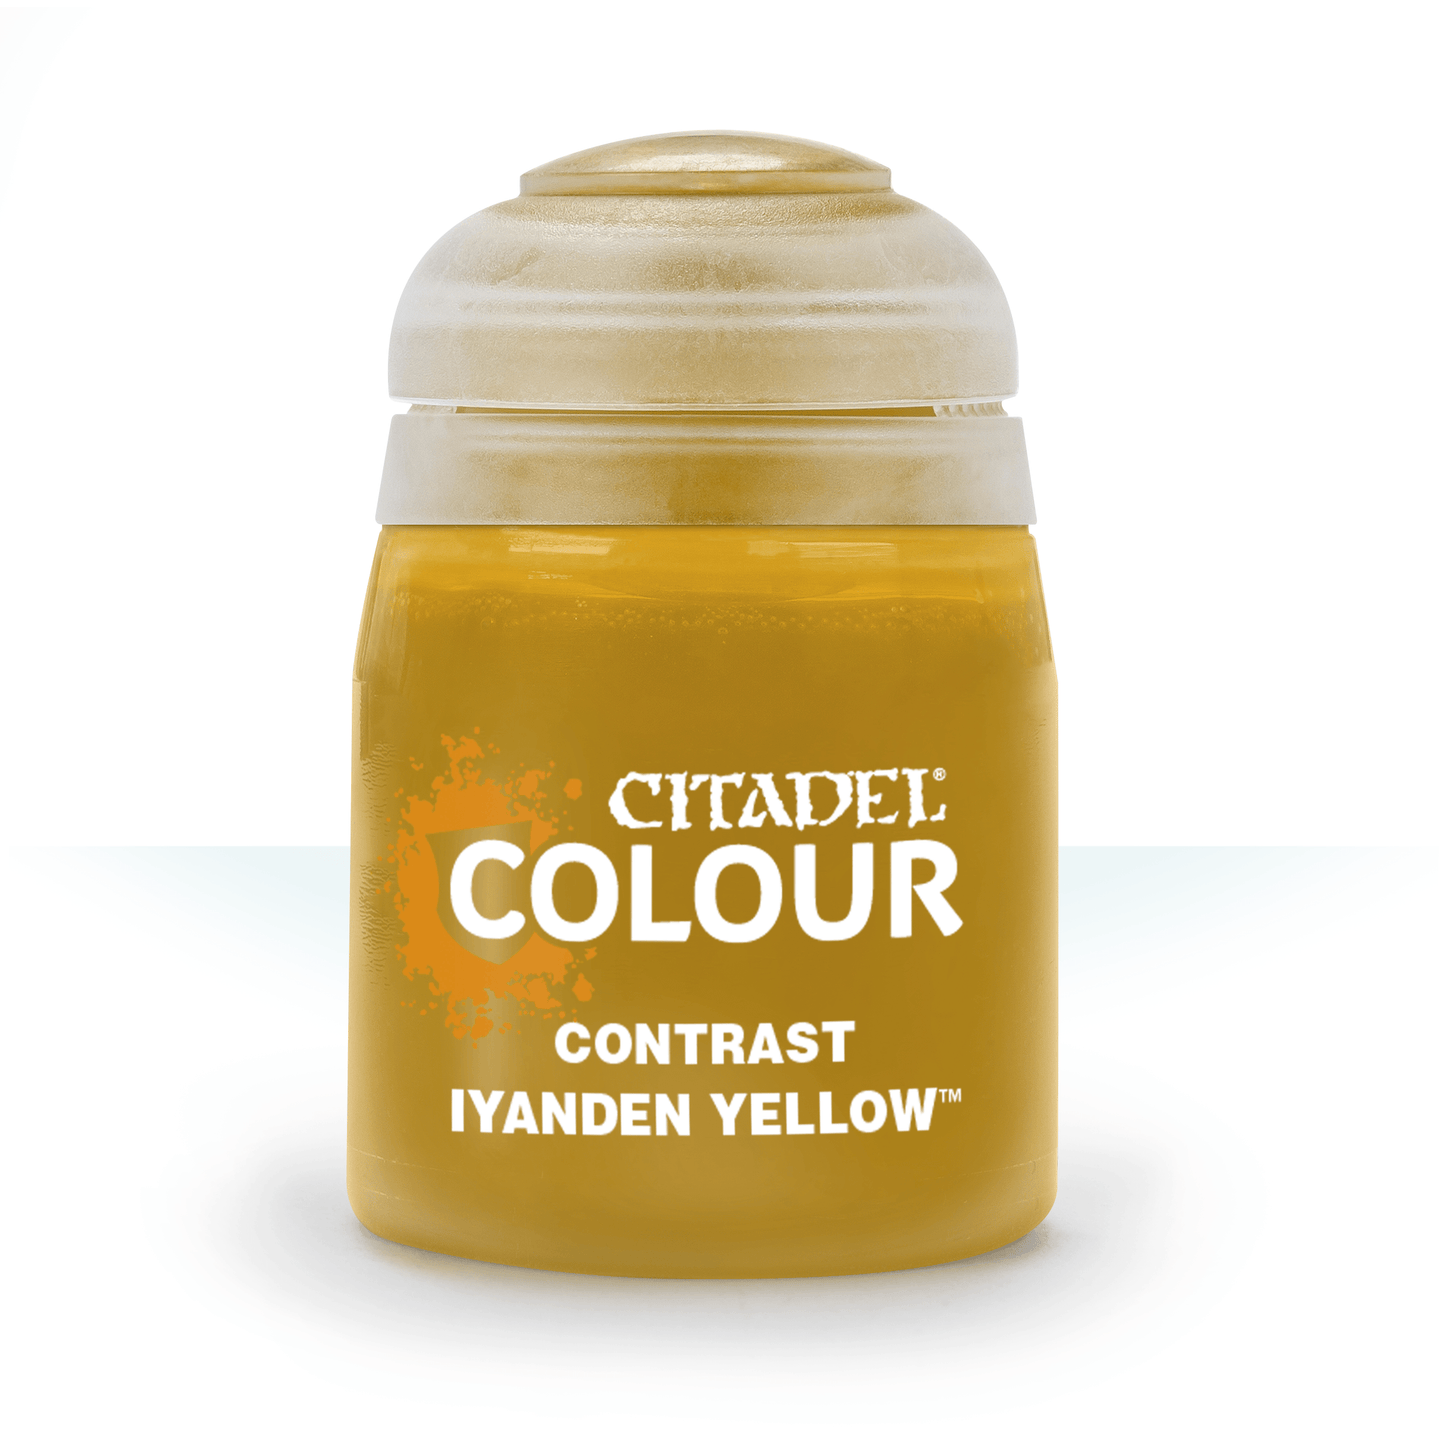 Citadel Colour Paints - Iyanden Yellow (18ml)